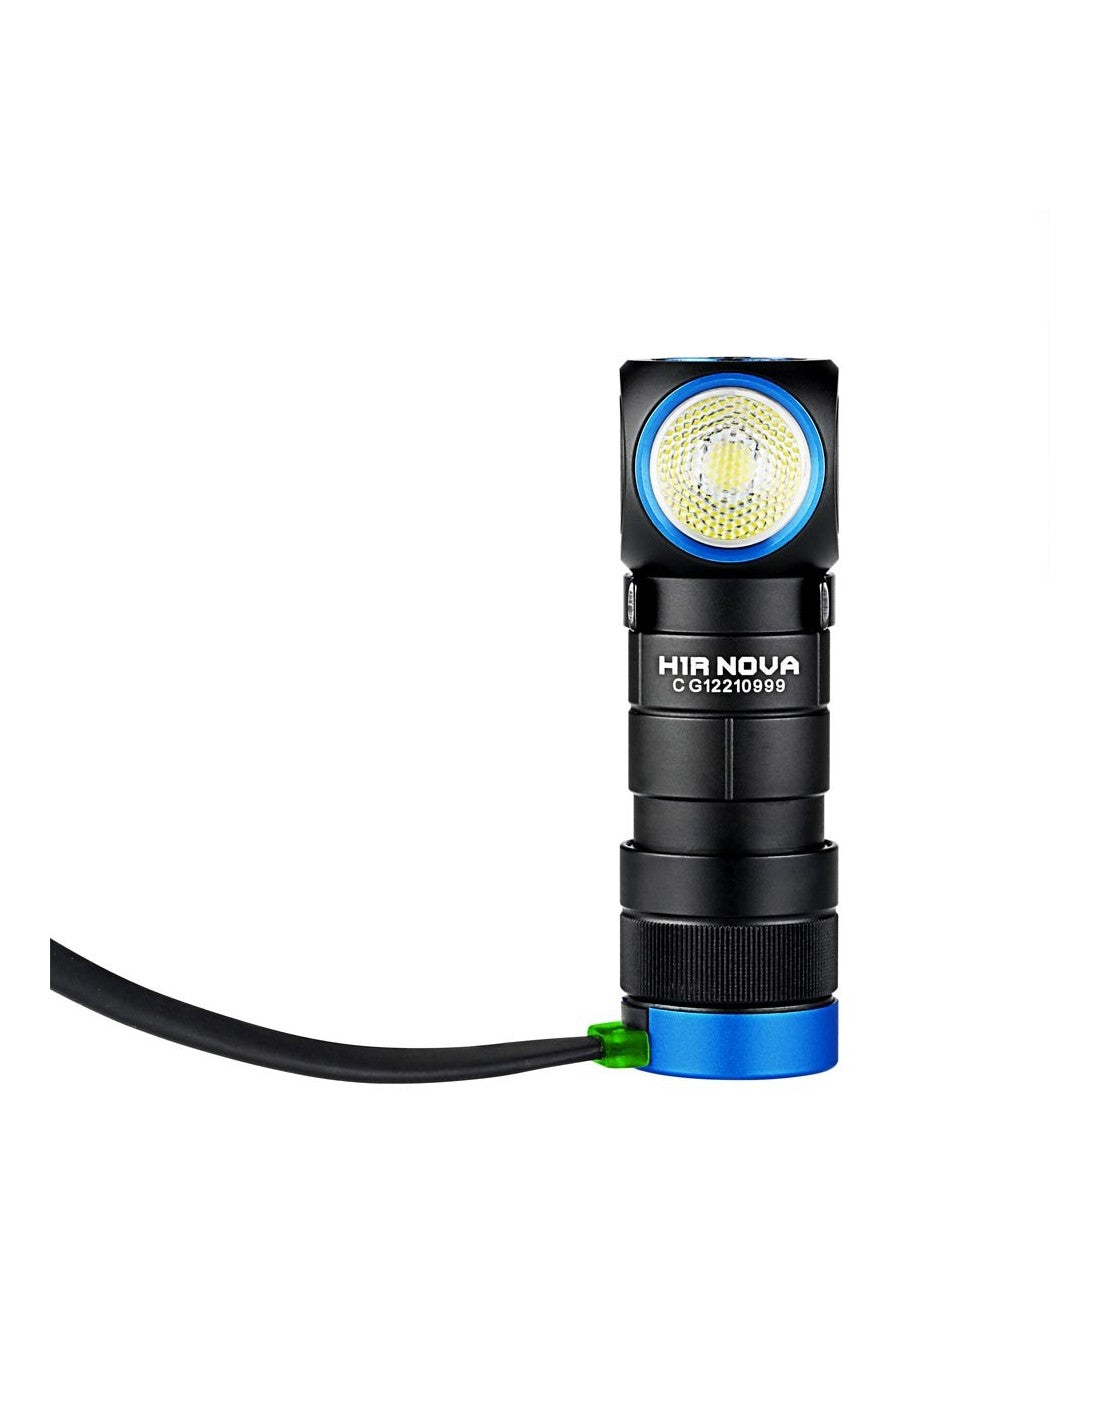 H1R Nova LED headlamp 600 lum. olight